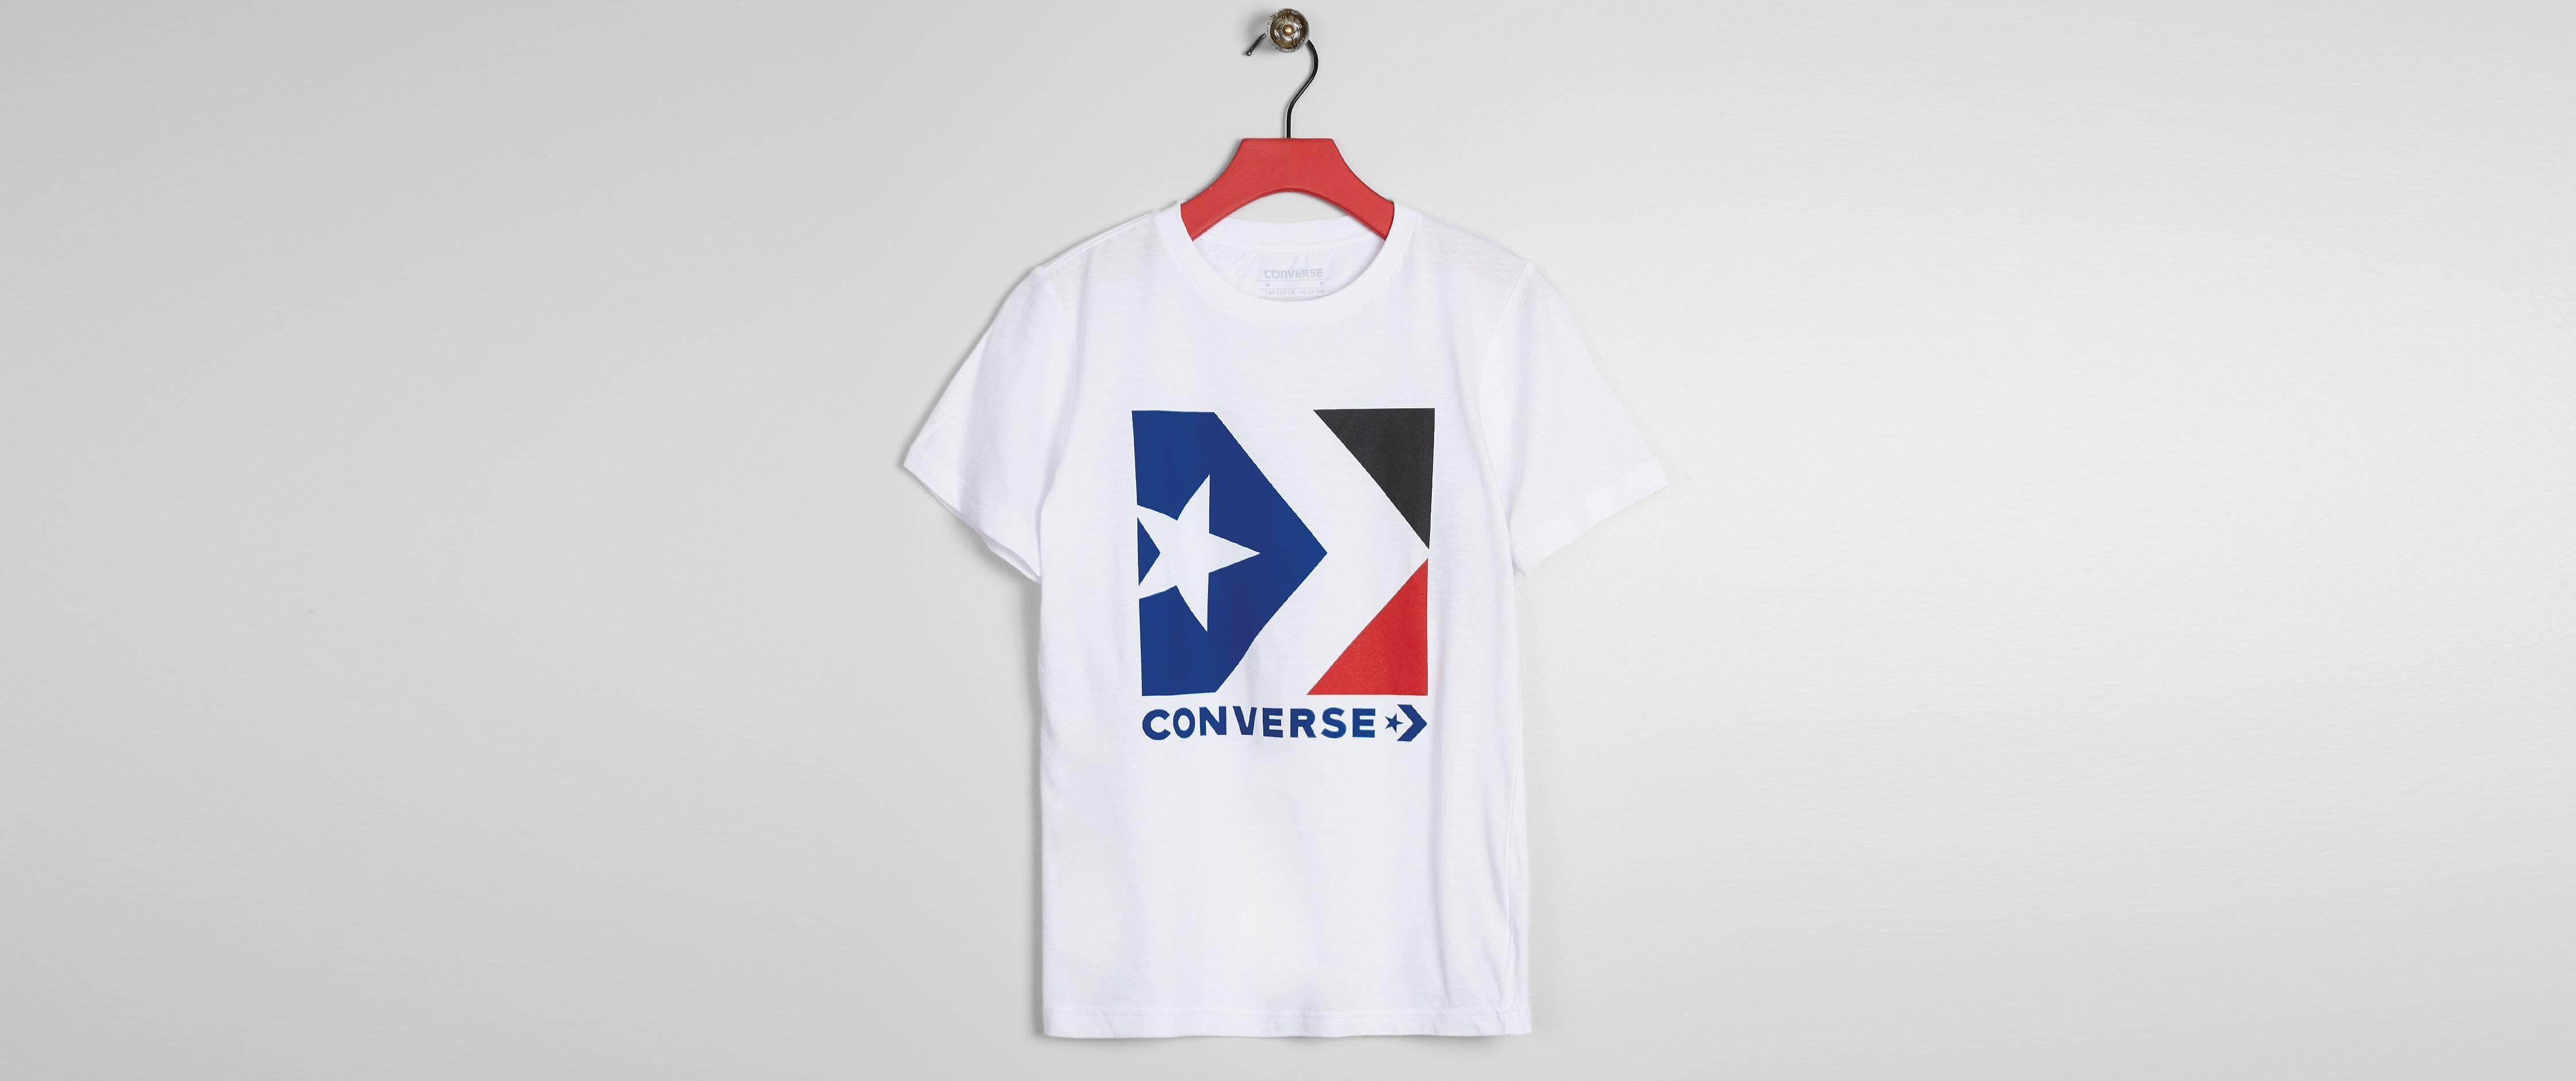 converse shirts